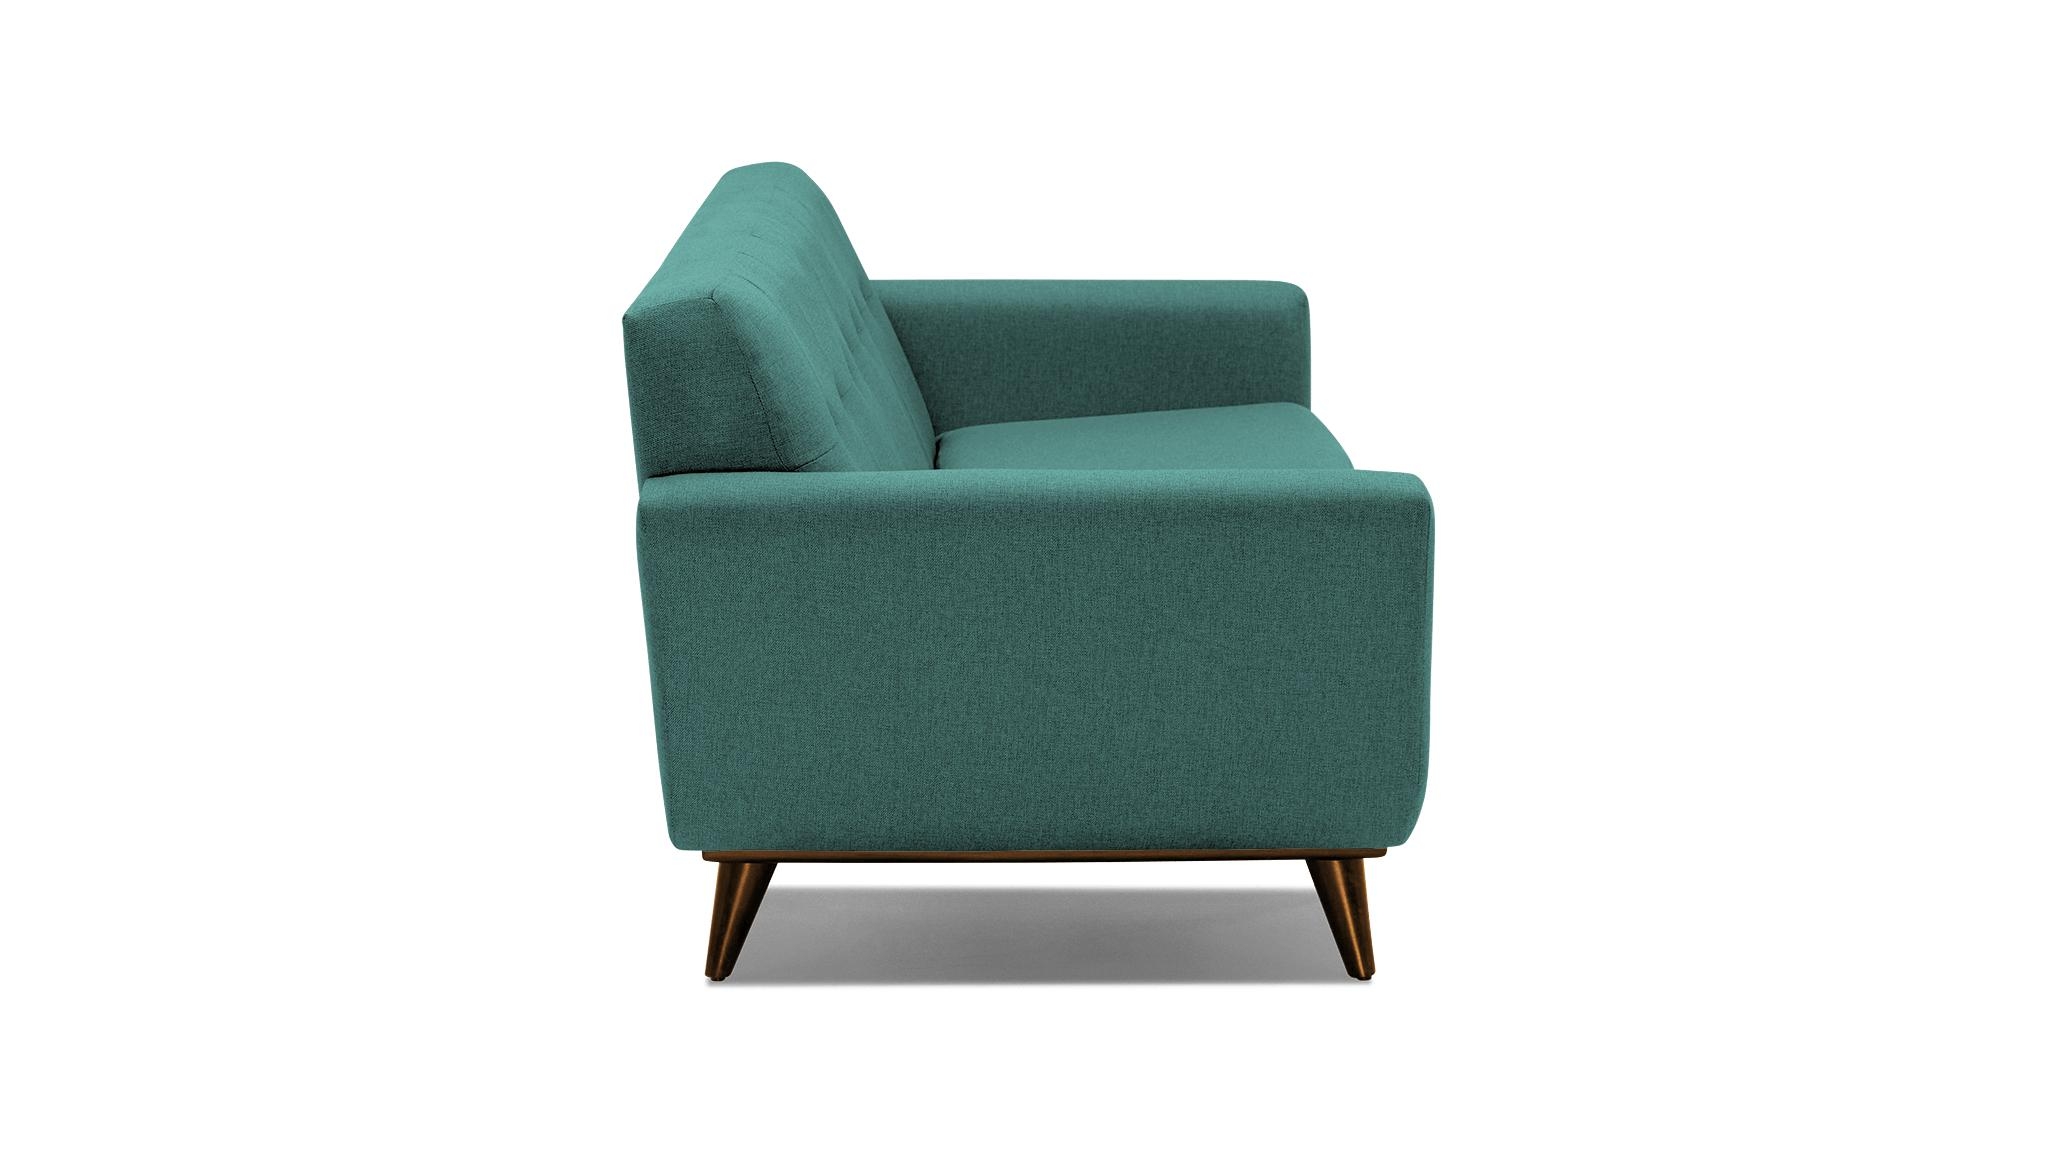 Blue Hughes Mid Century Modern Sofa - Prime Peacock - Mocha - Image 2